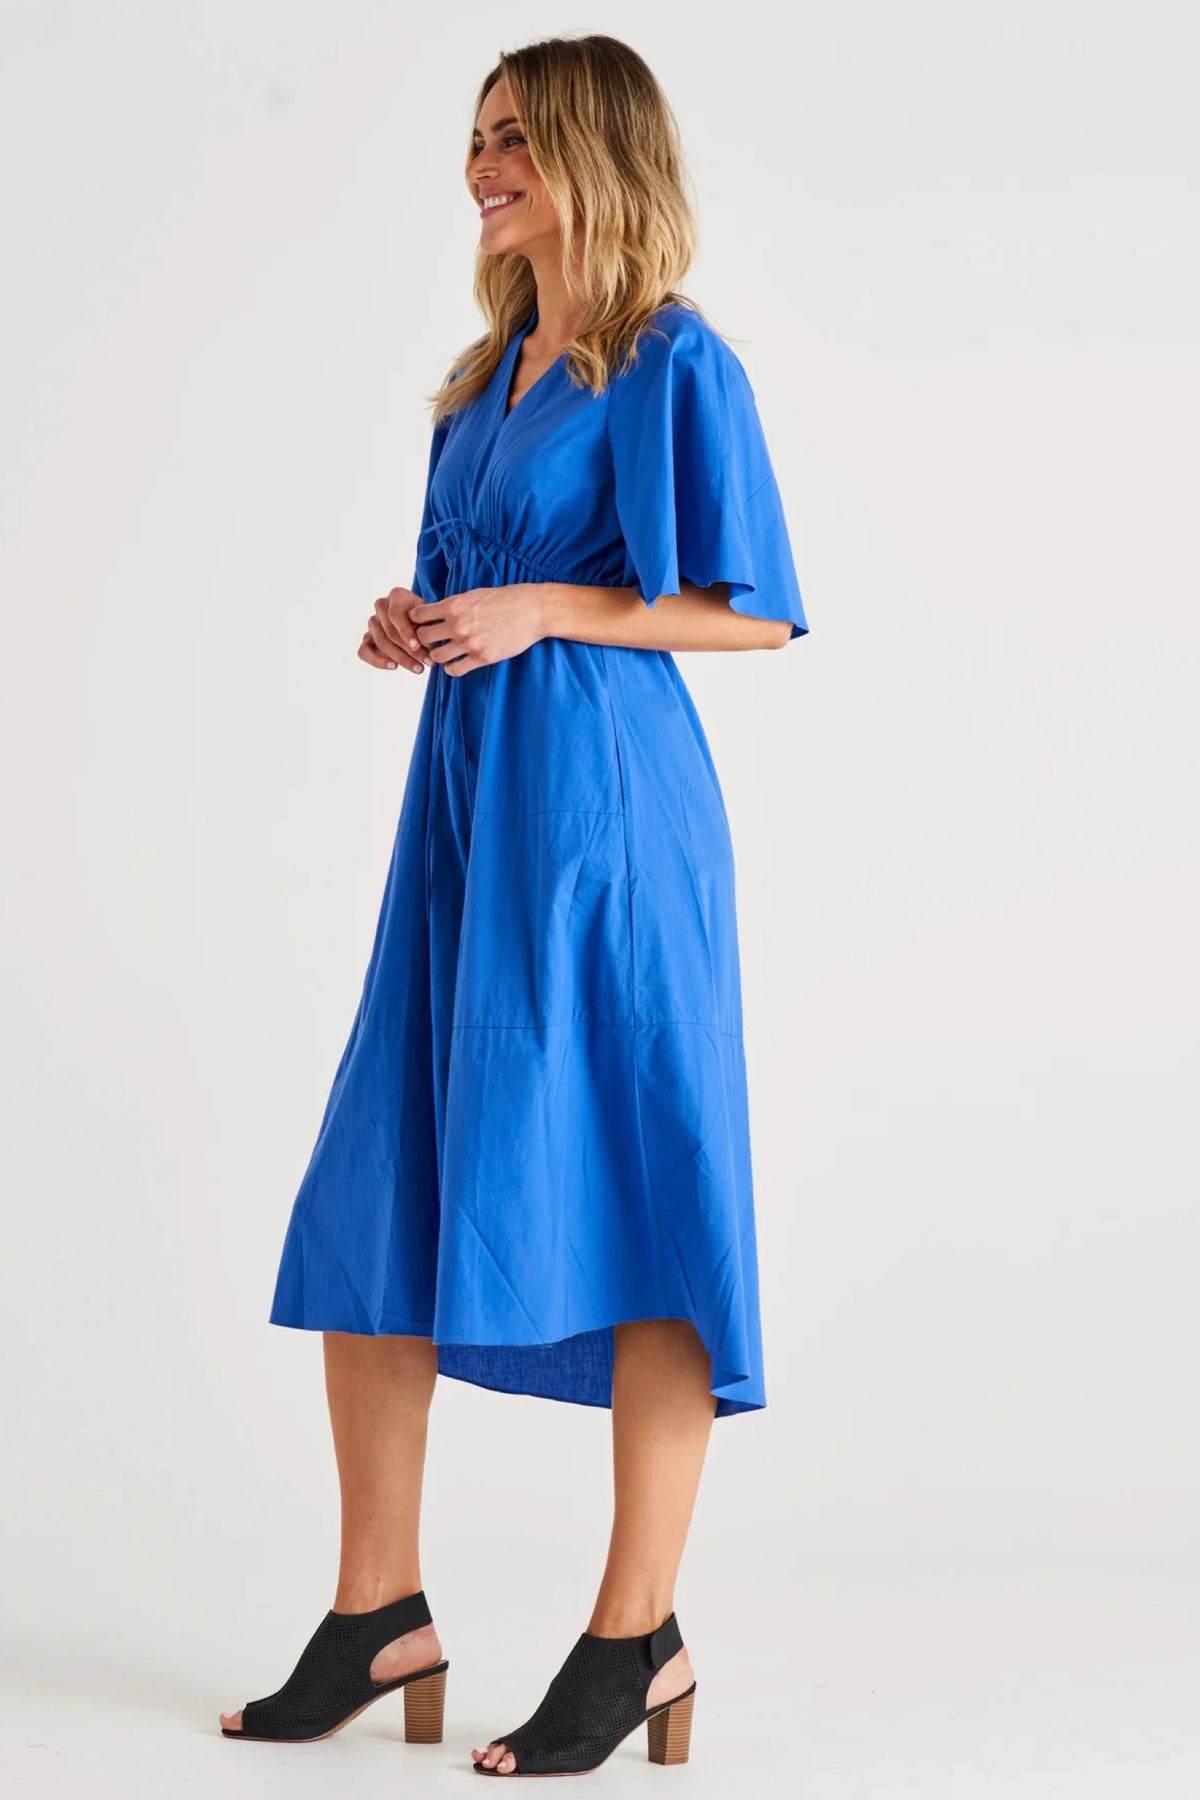 Cora Dress Iris Blue – Mint Boutique LTD - All Rights Reserved